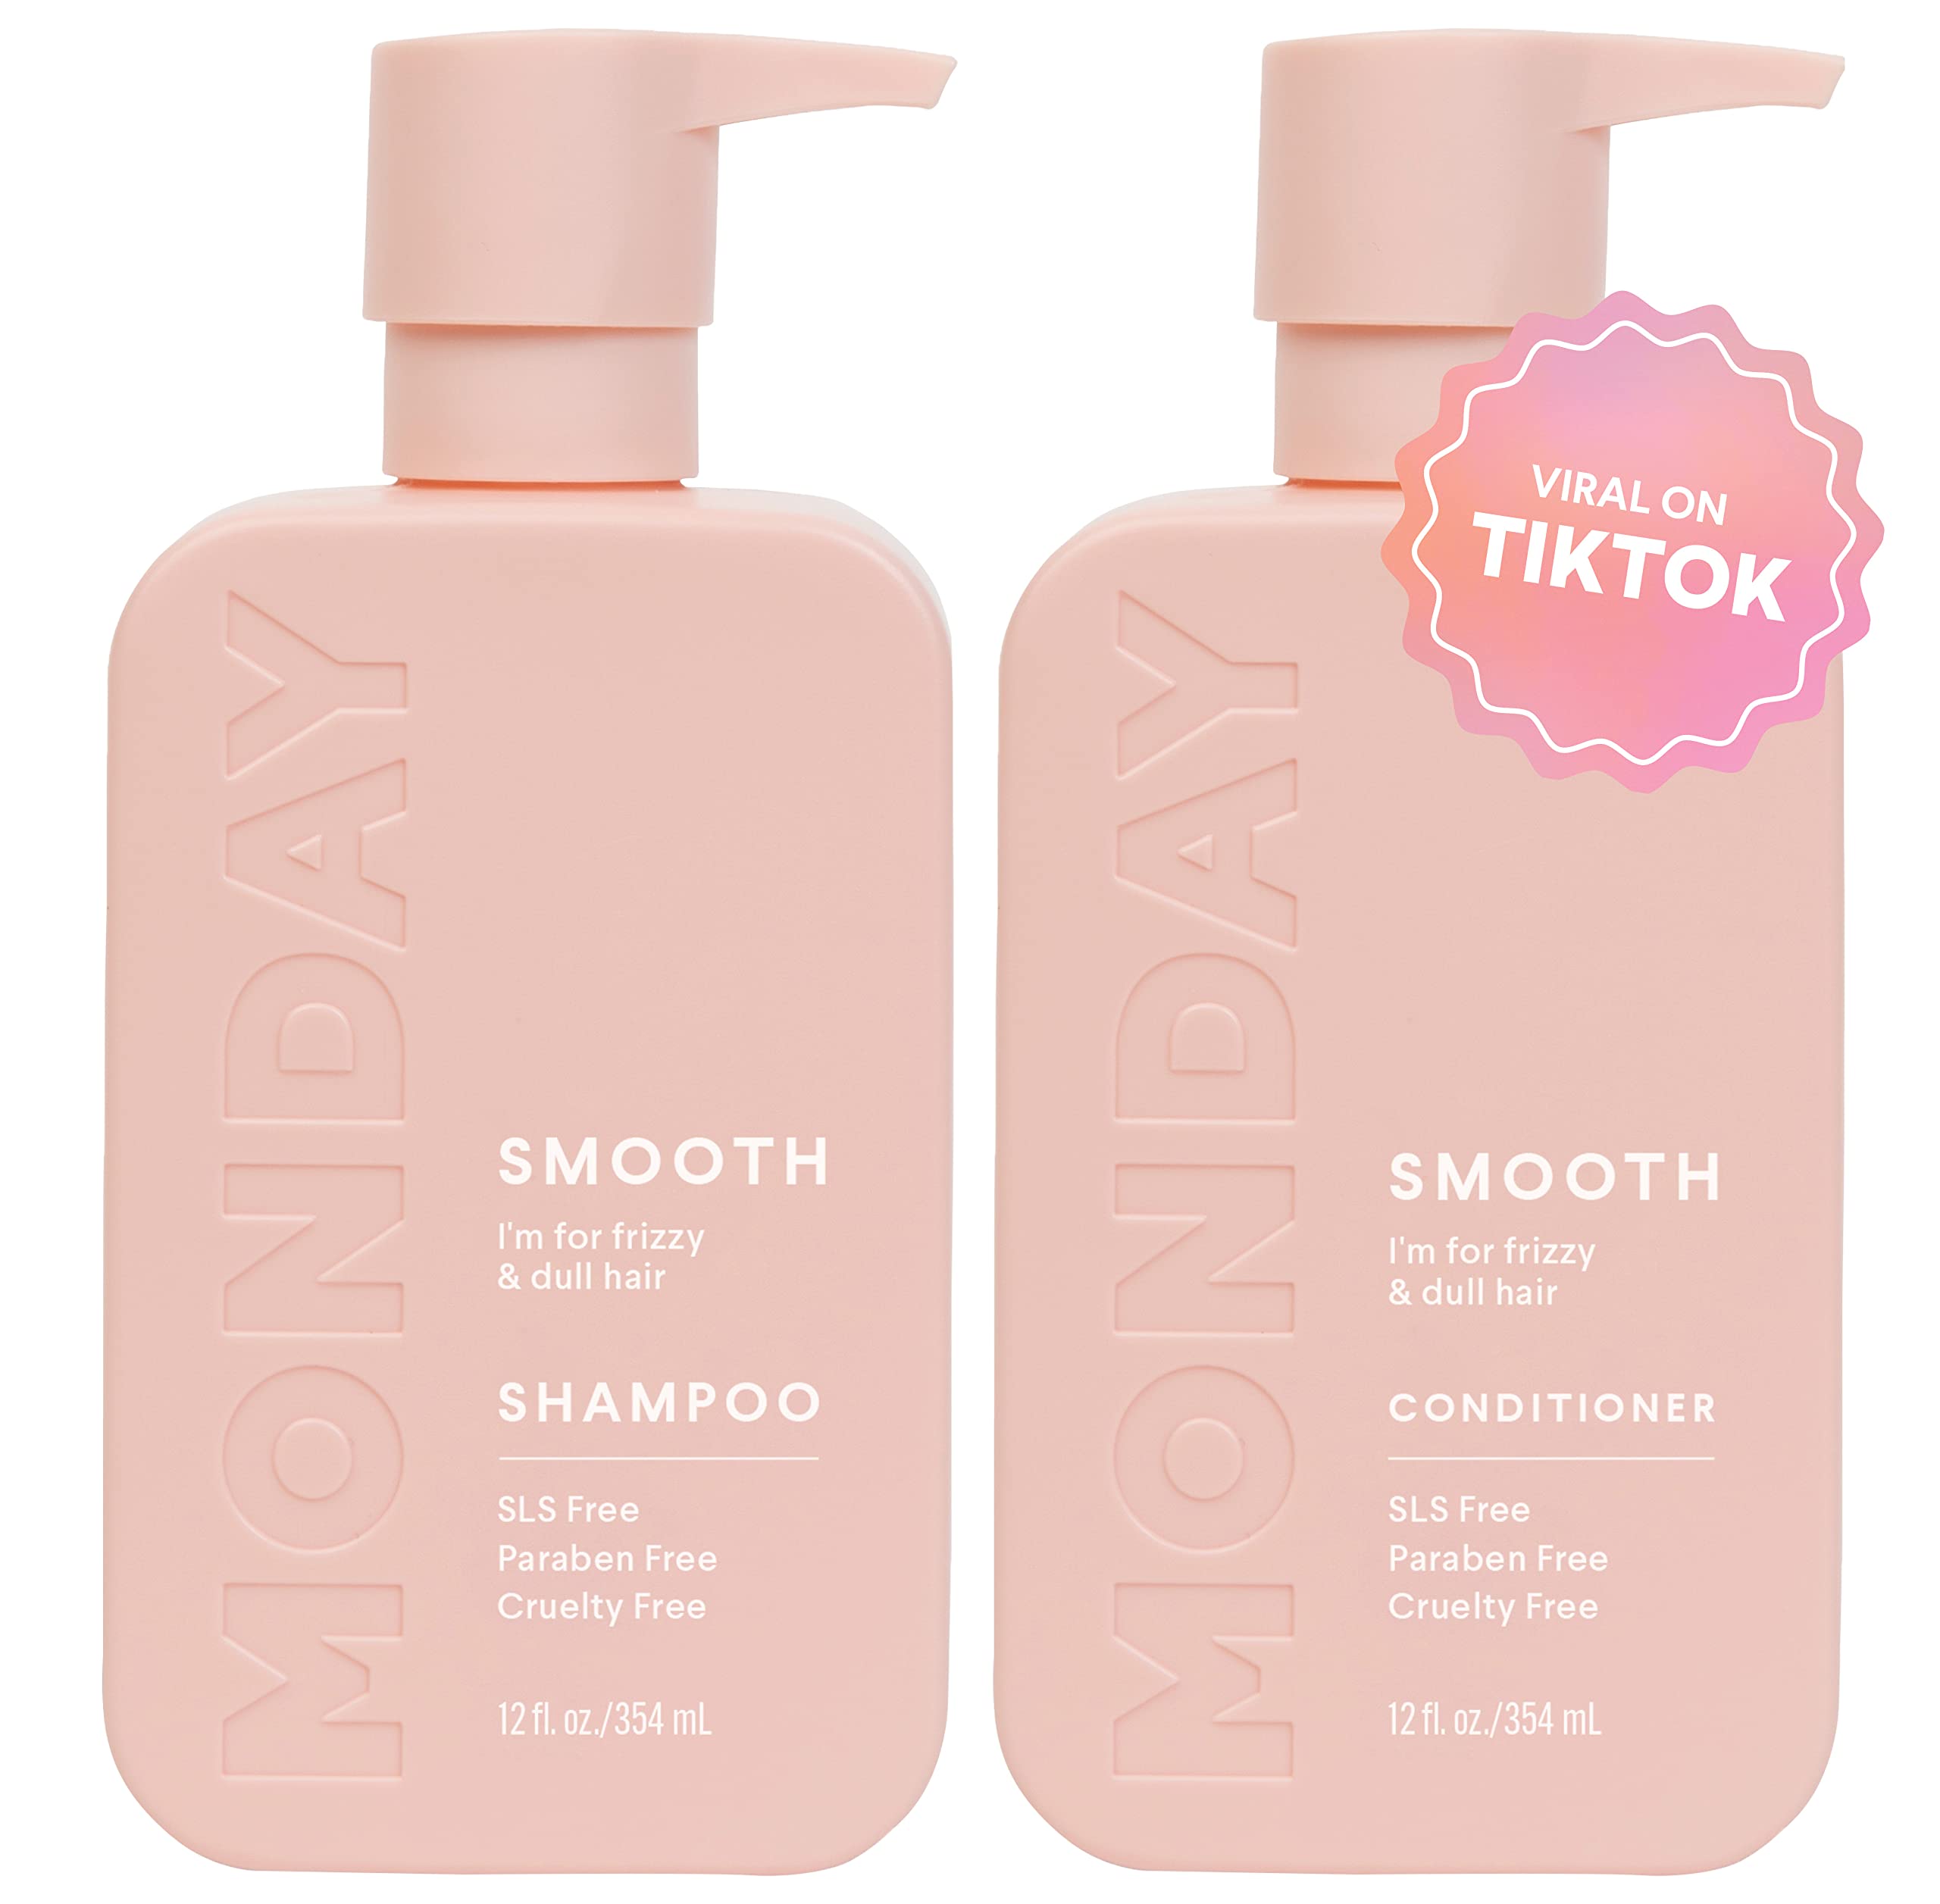 MONDAY Haircare + Smooth Shampoo + Conditioner Set